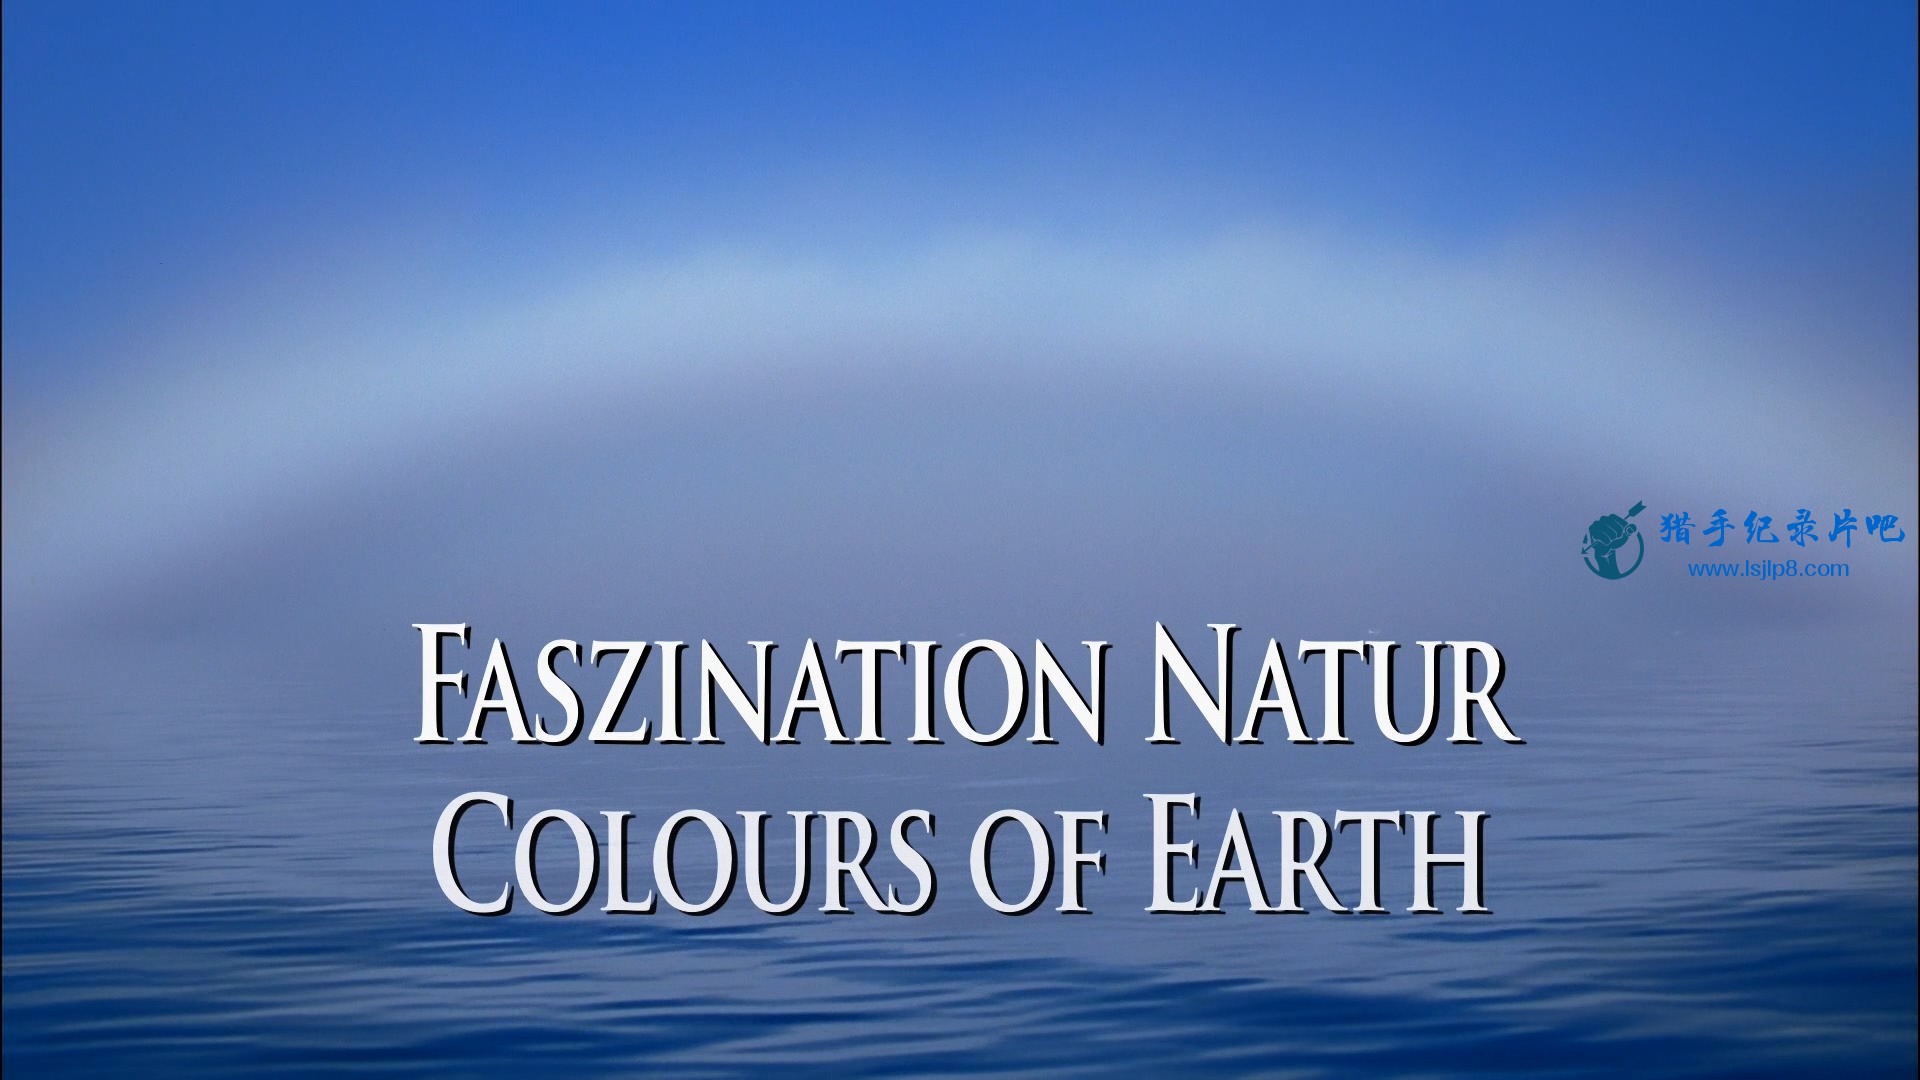 Fascinating.Nature.Colours.of.Earth.BDRip.1080p.mkv_20200624_101856.101_ͼ.jpg